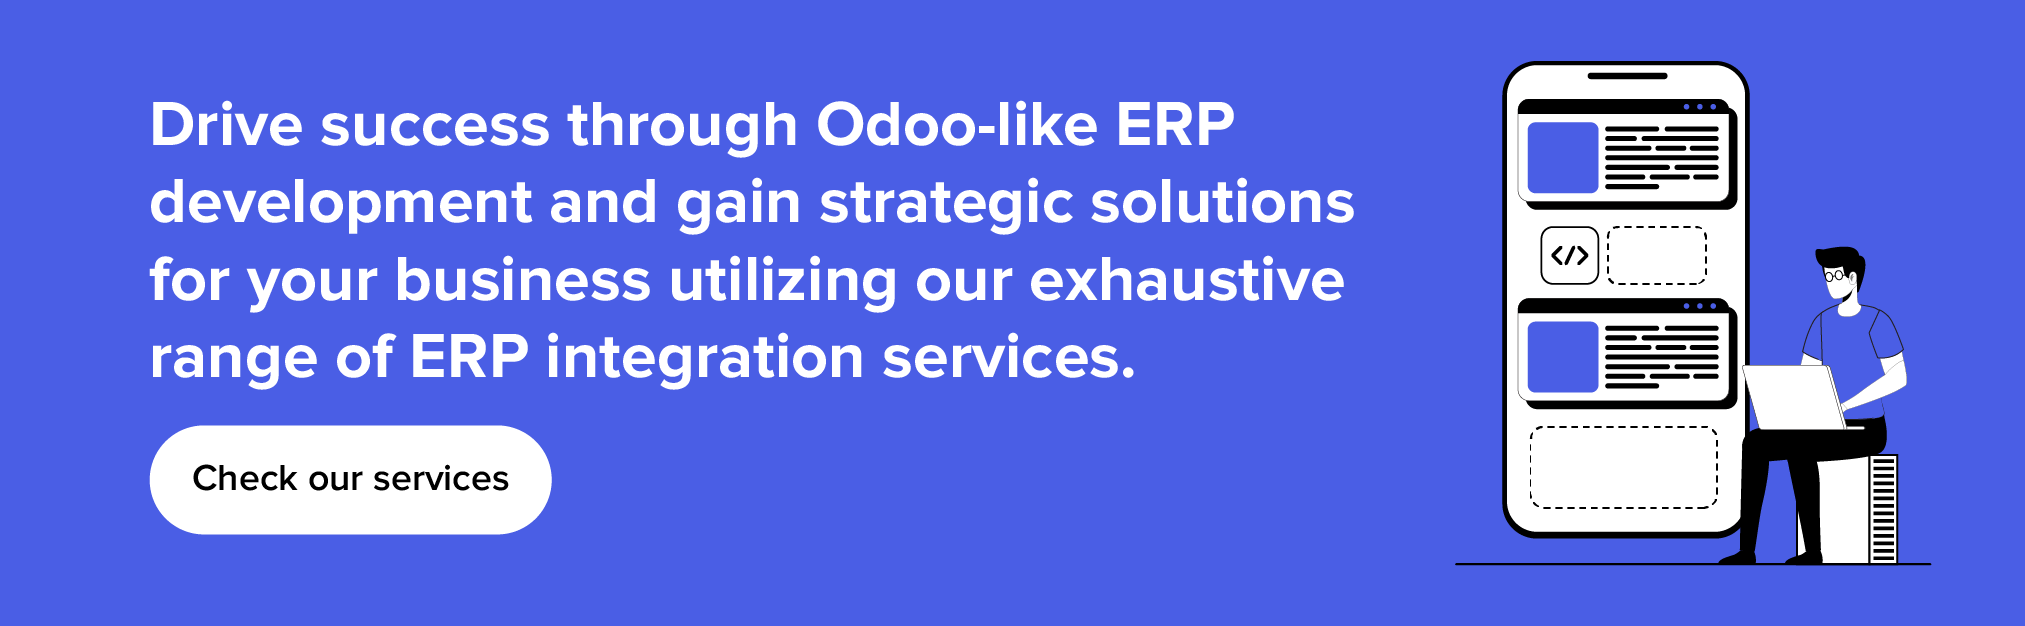 Odoo-like ERP development